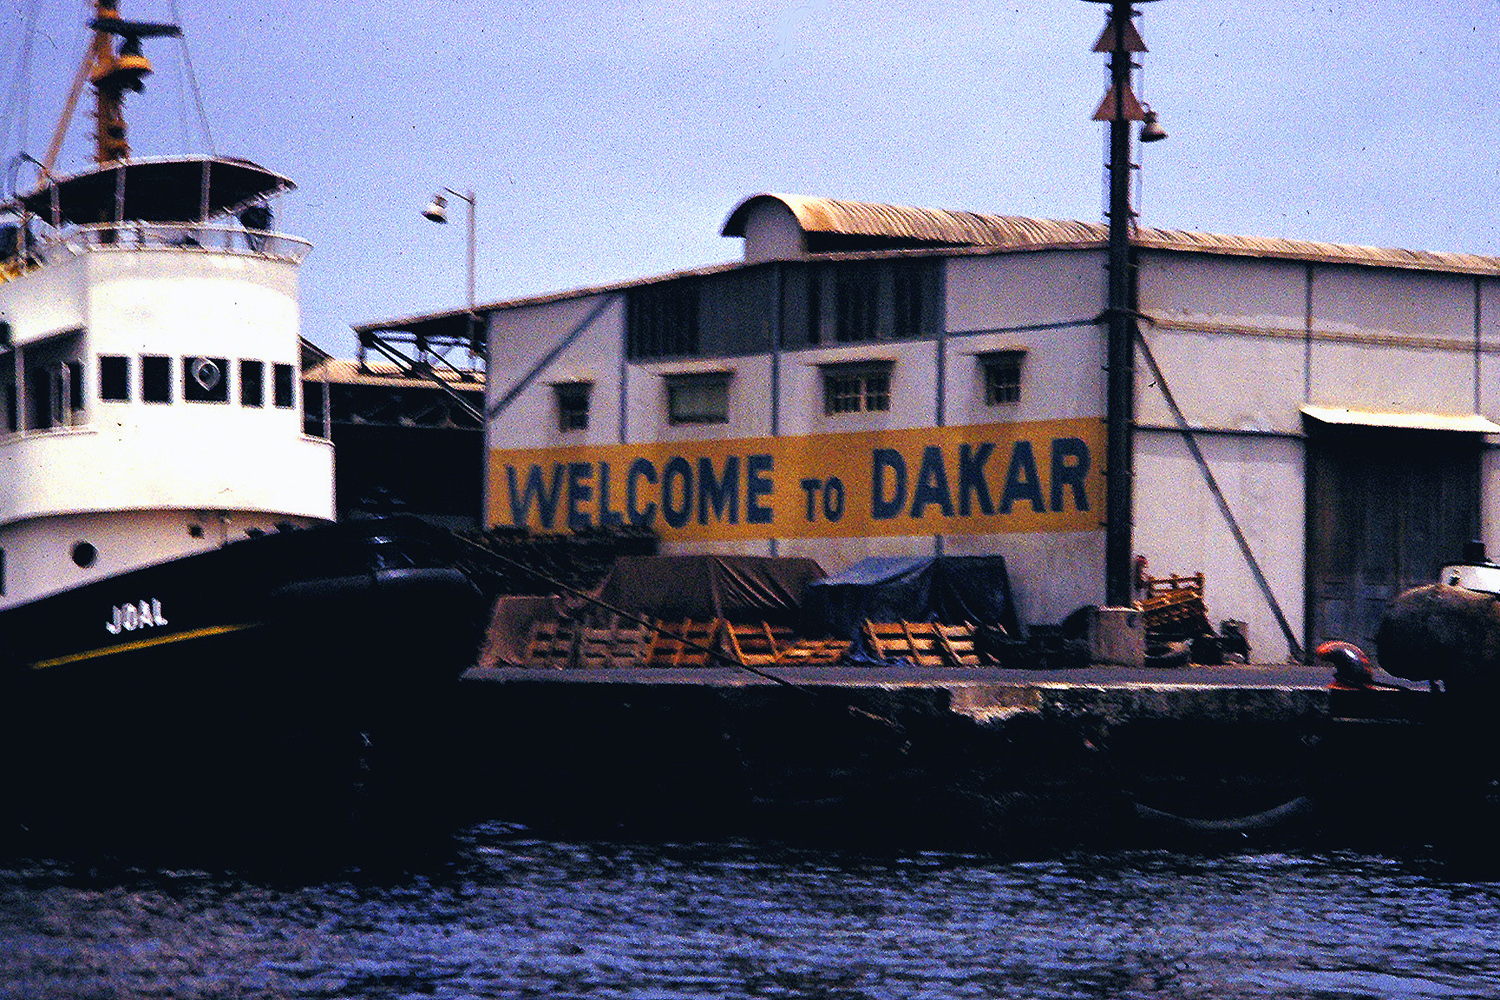 Eclipse 1973 - A33 - Welcome to Dakar - 5144